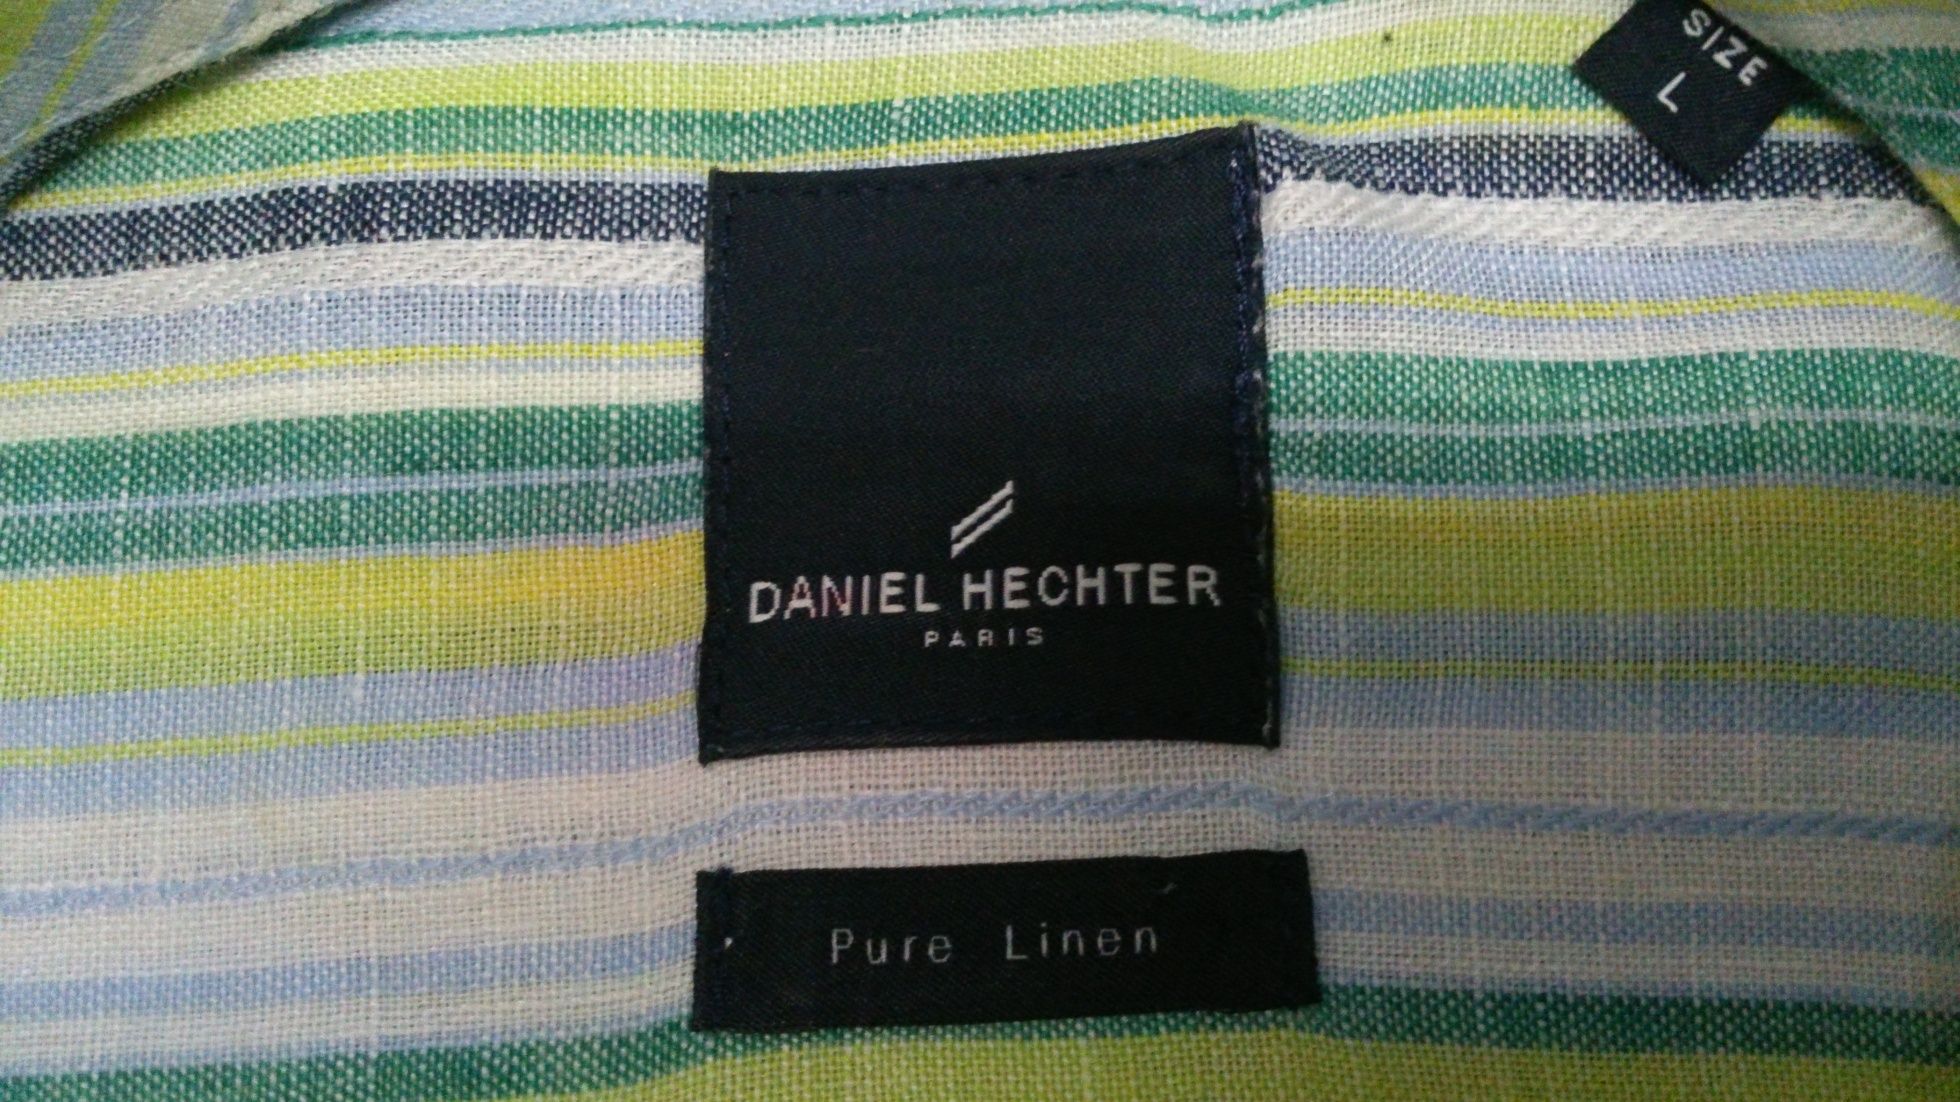 Рубашка Daniel Hechter Paris.